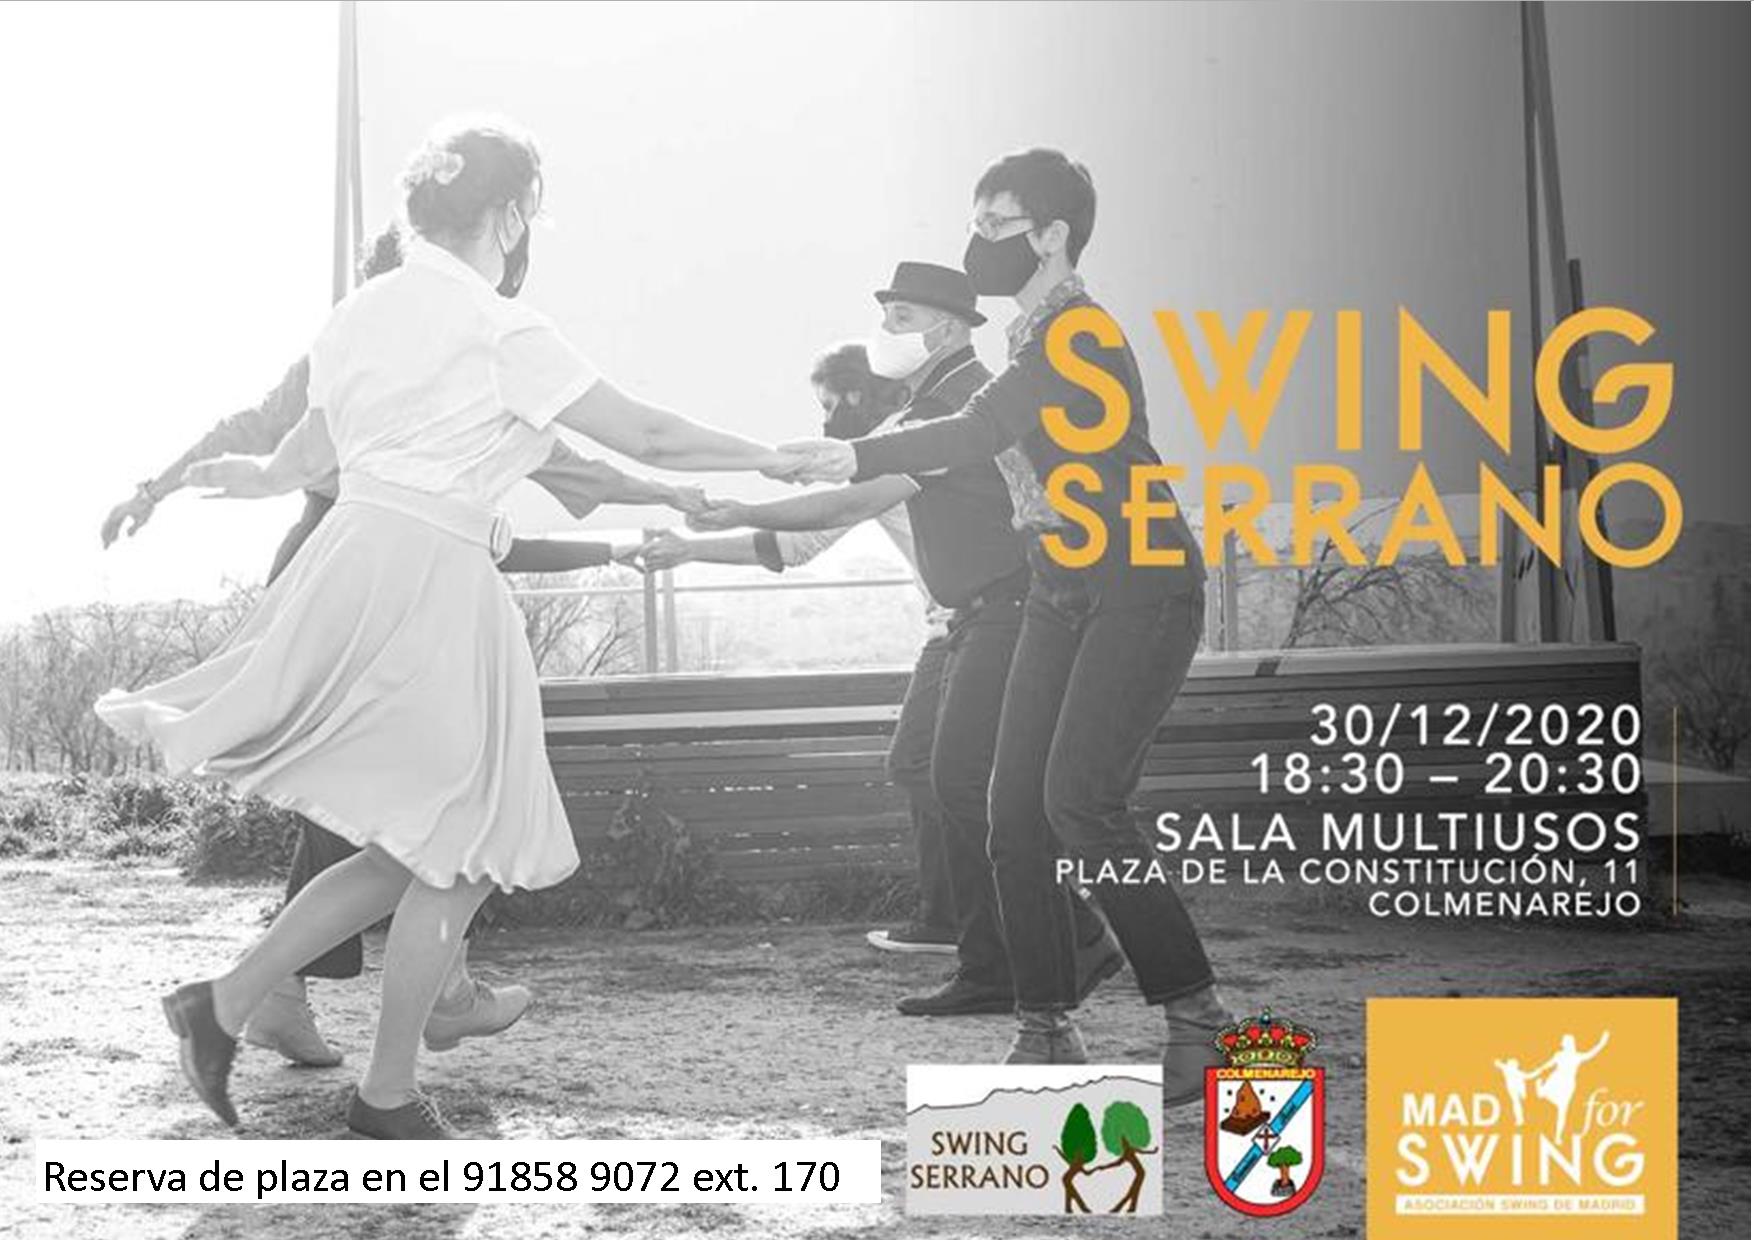 Baile: SWING SERRANO @ Sala Multiusos